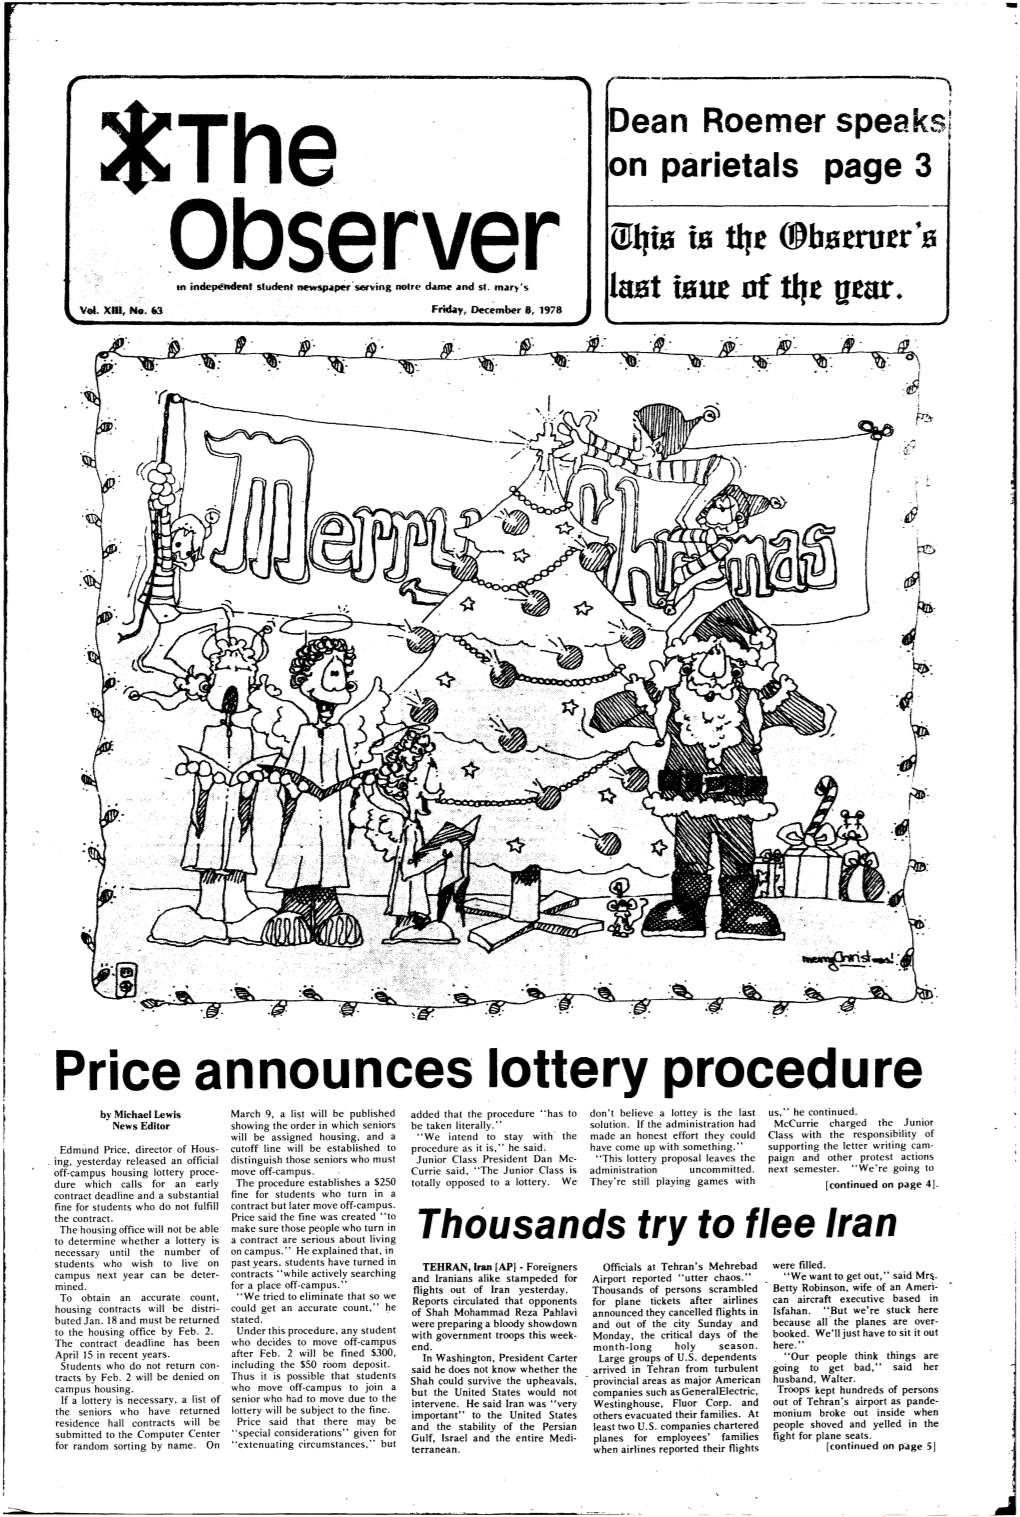 Price Announces Lottery Procedure